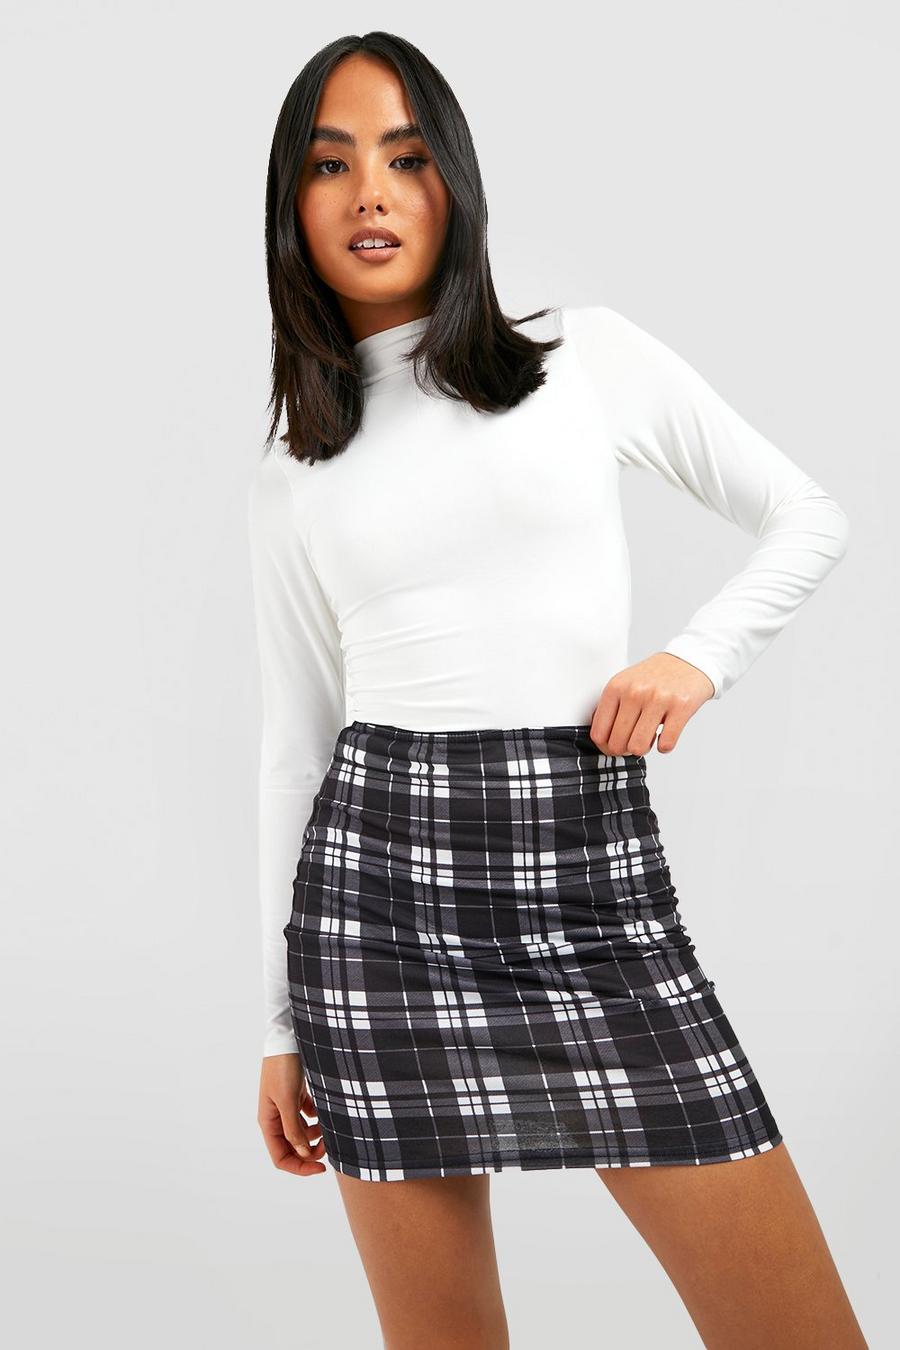 Plaid Skirts Tartan Check Skirts PrettyLittleThing AUS | epicrally.co.uk